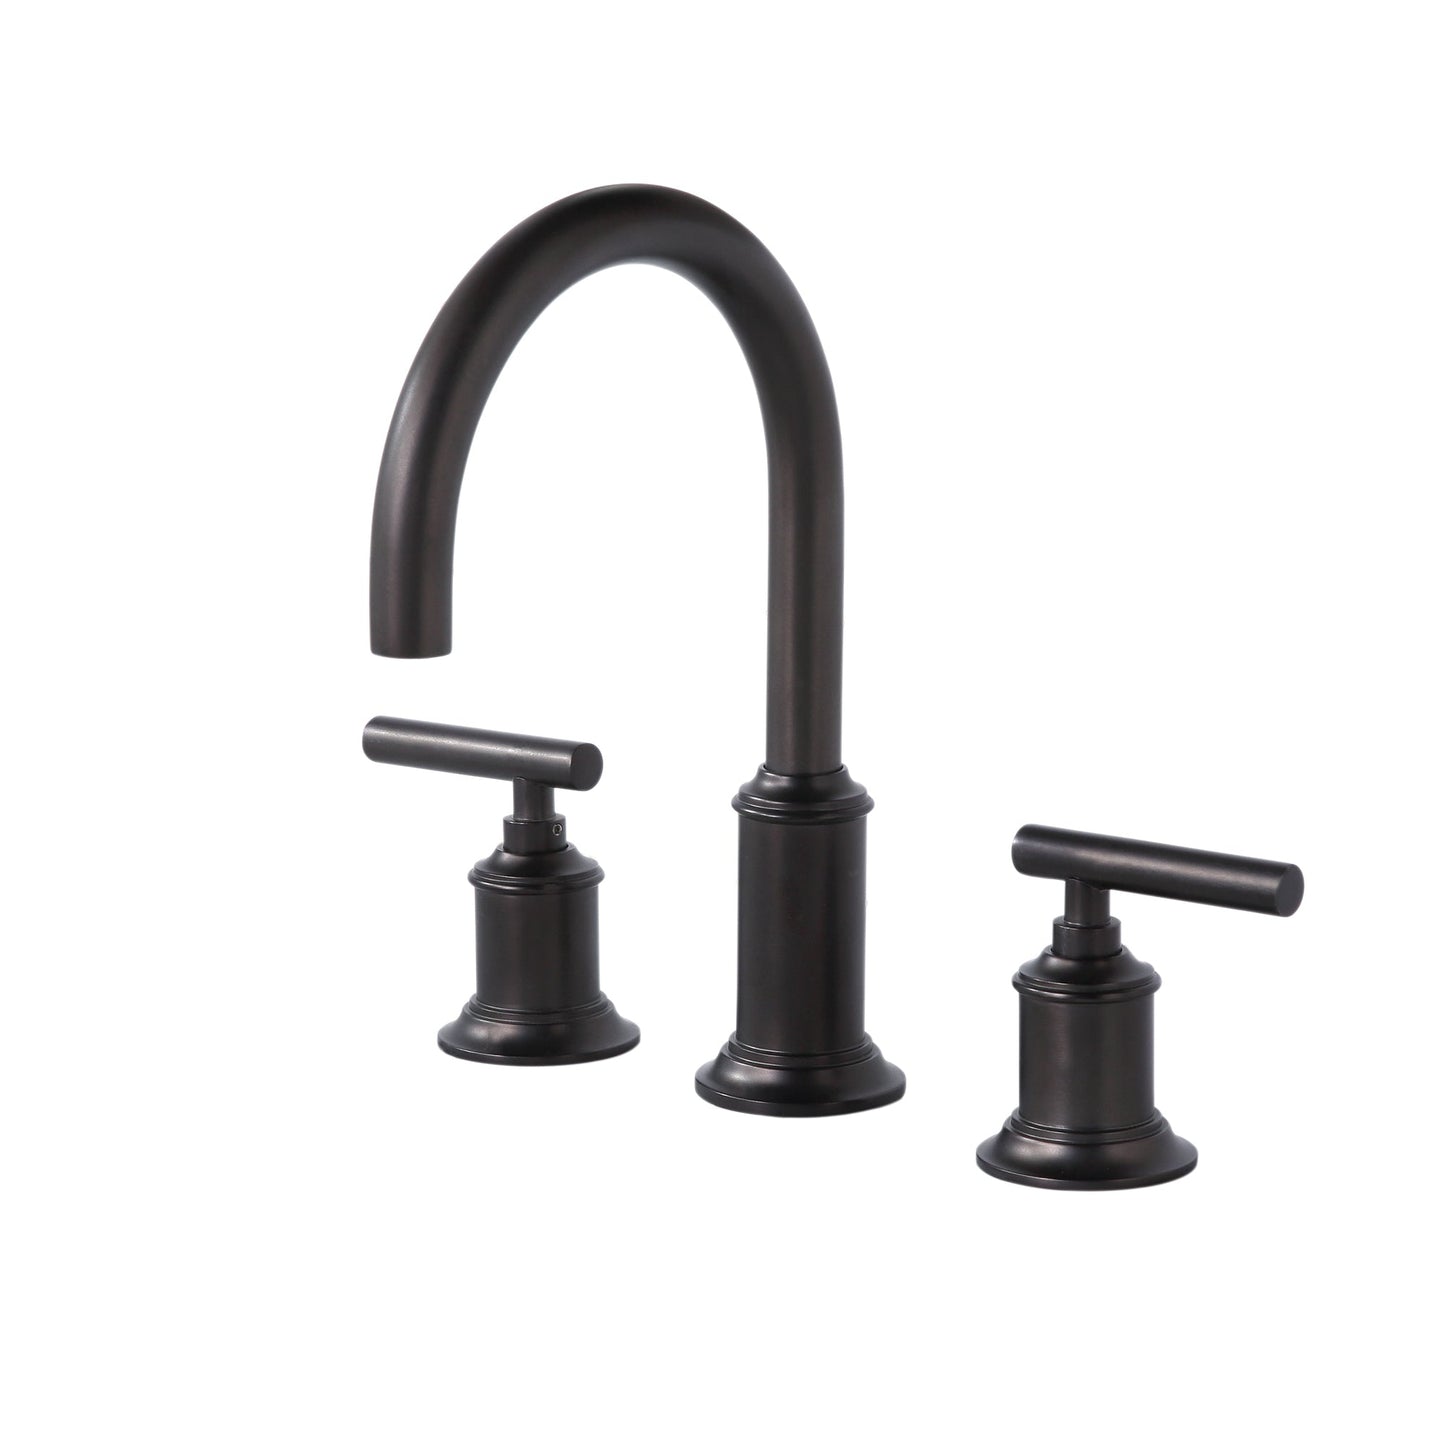 Water Creation Modern Gooseneck Spout Widespread Faucet F2-0014 Bronze Solid Brass Faucet